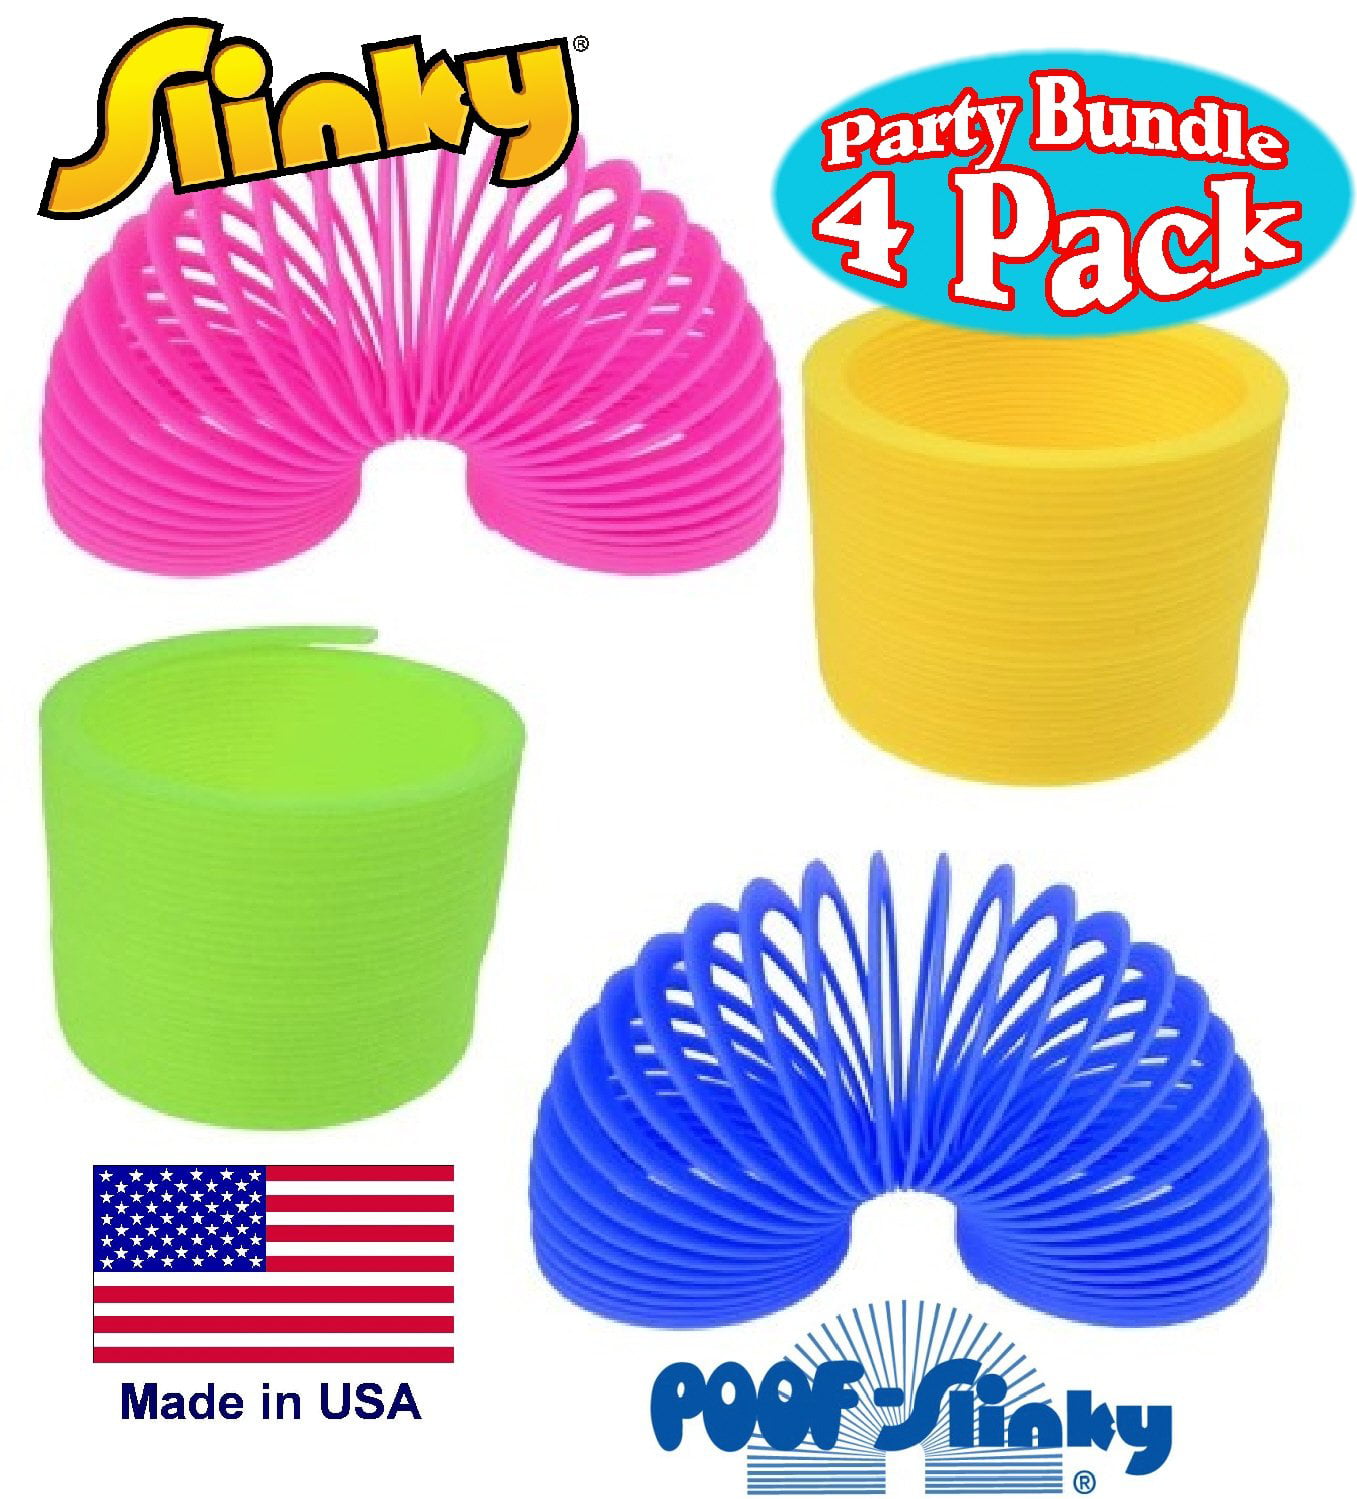 Assorted 4 Pack Poof Slinky Original Plastic Slinky Gift Set Party Bundle